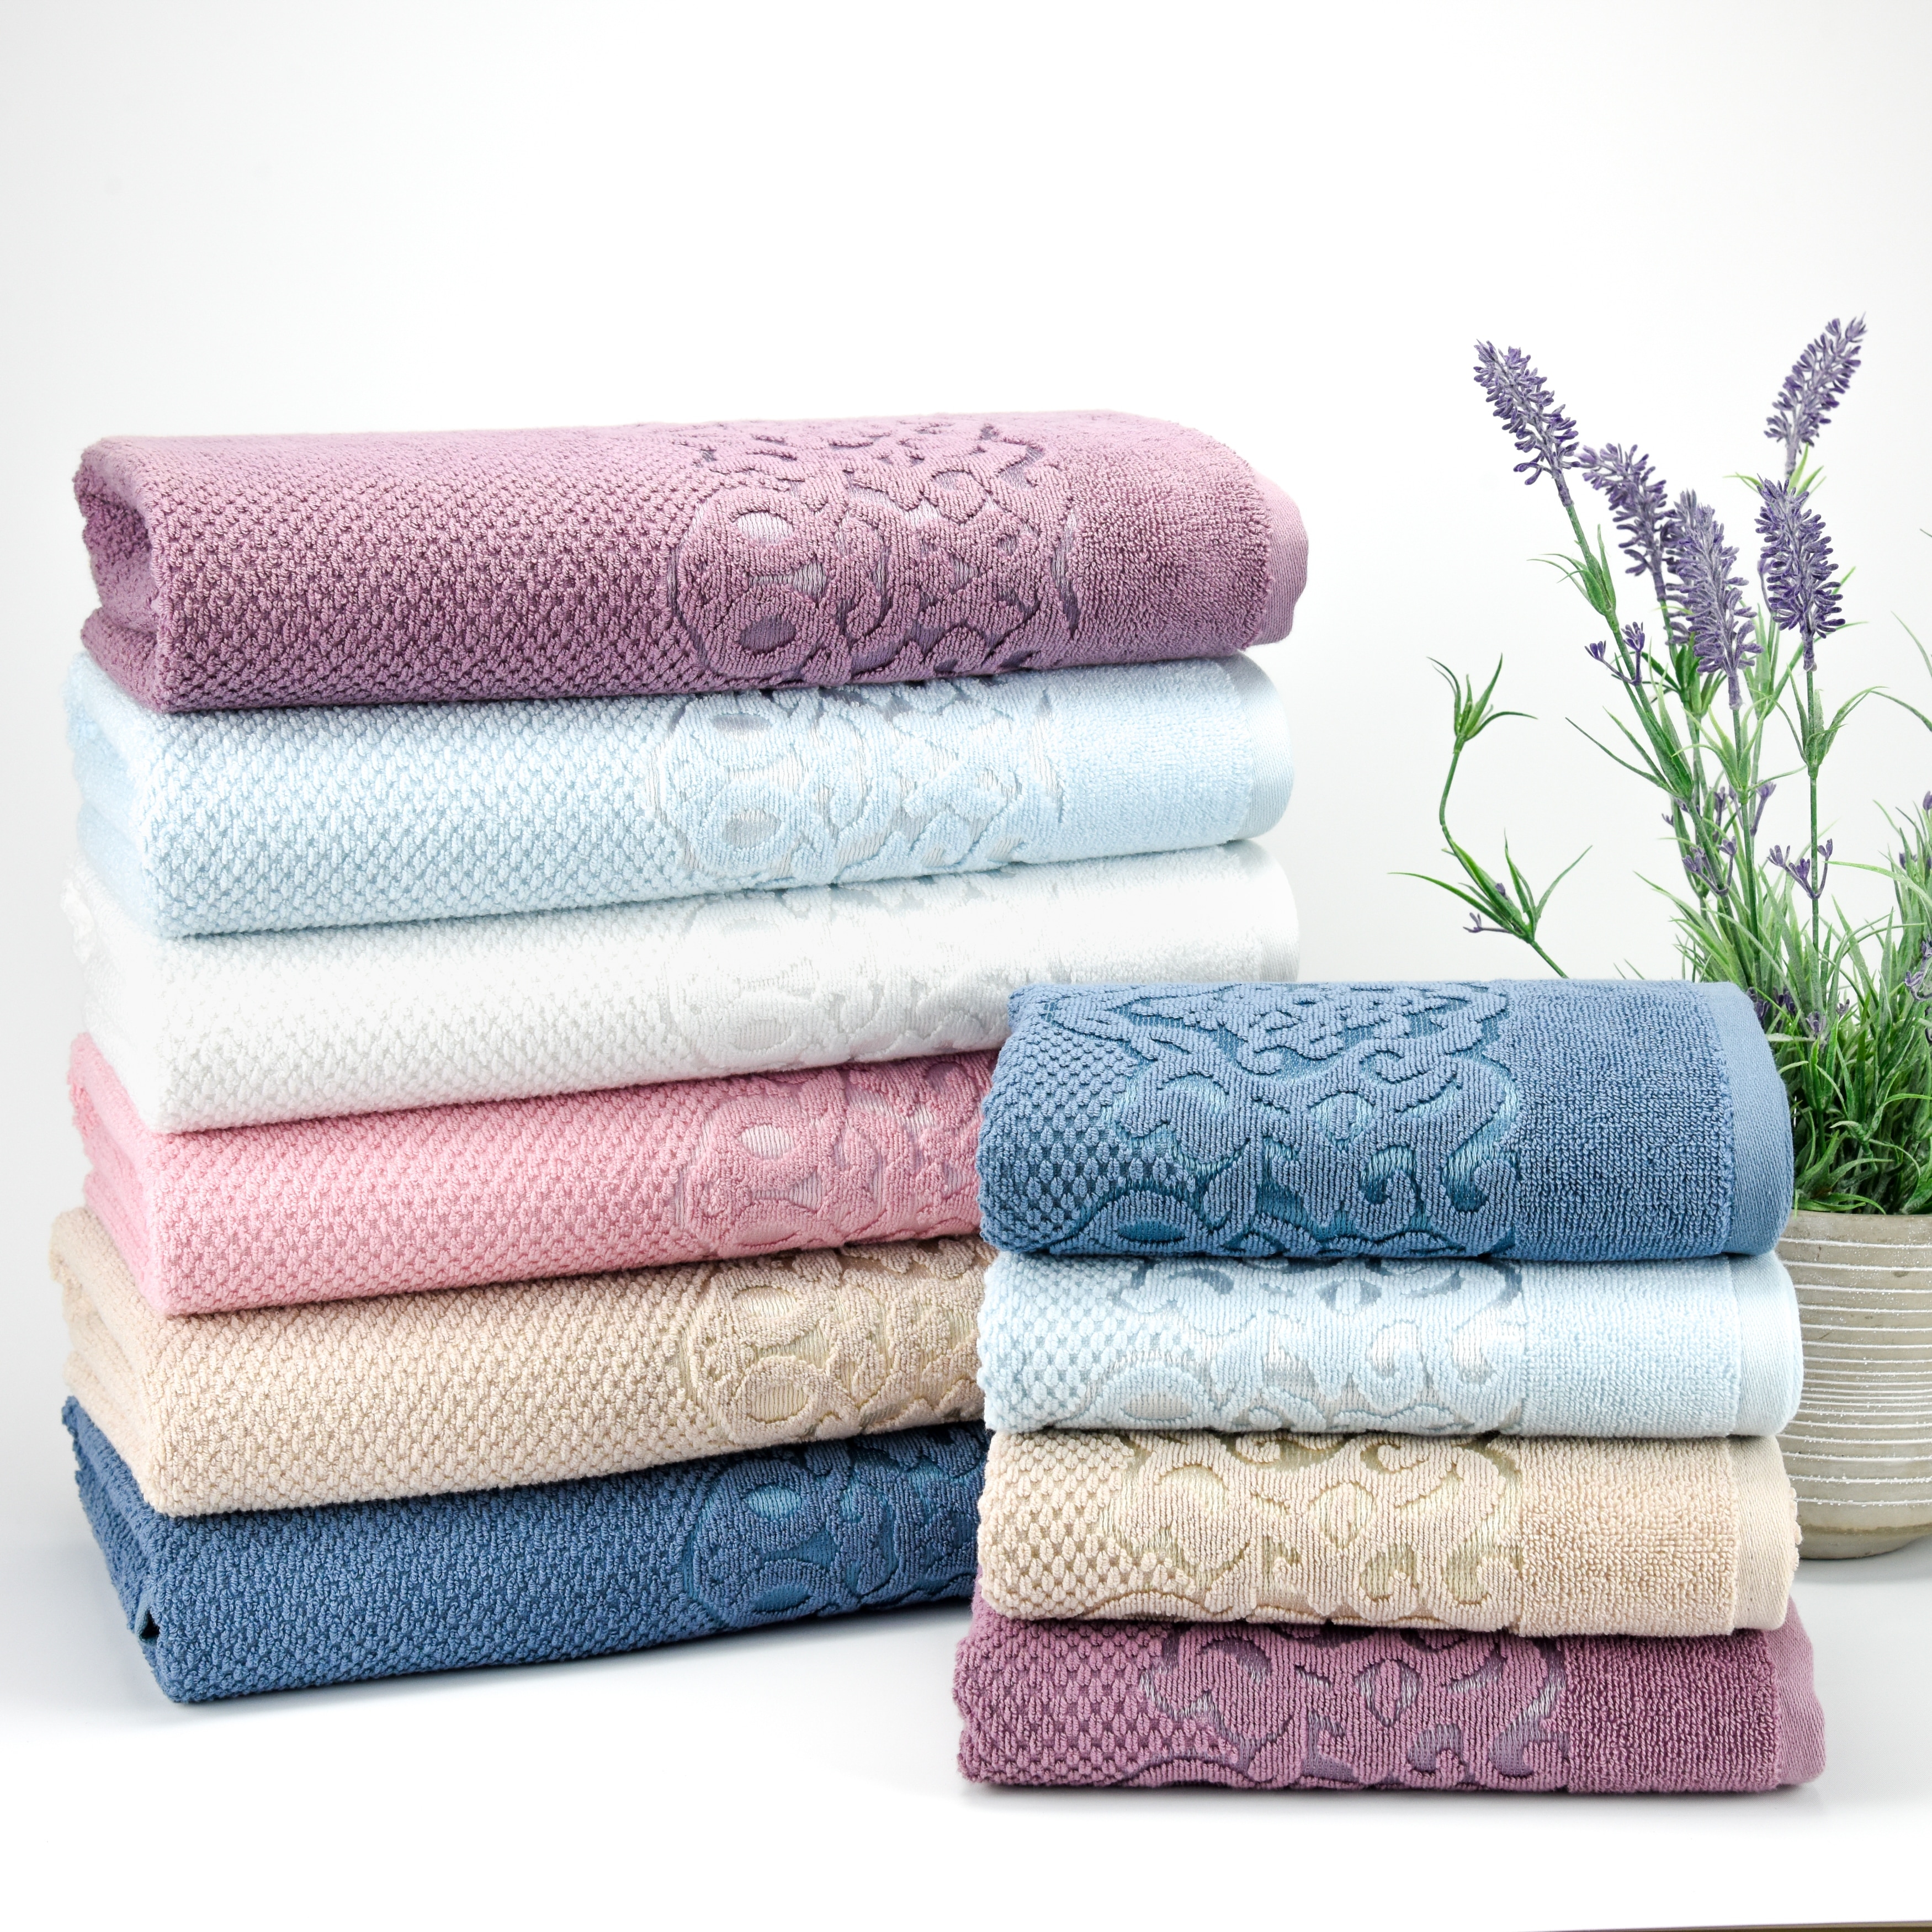 10 Ways to Use a Turkish Towel - East'N Blue